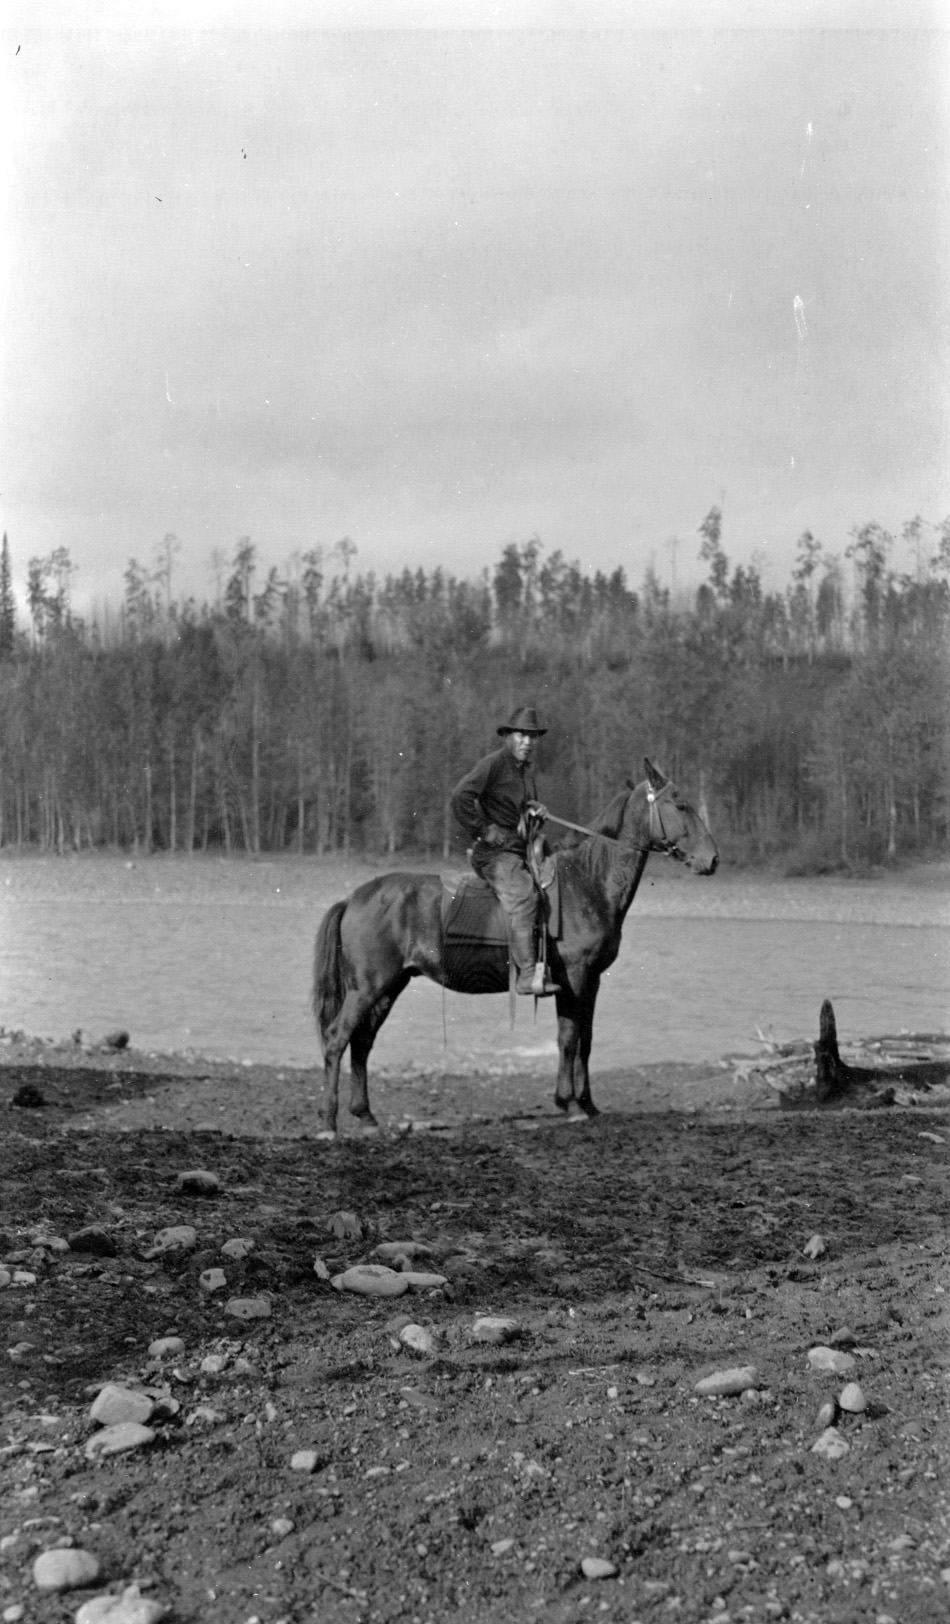 Shotridge Negative - Man (Shotridge?) on Horseback, probably Alaska